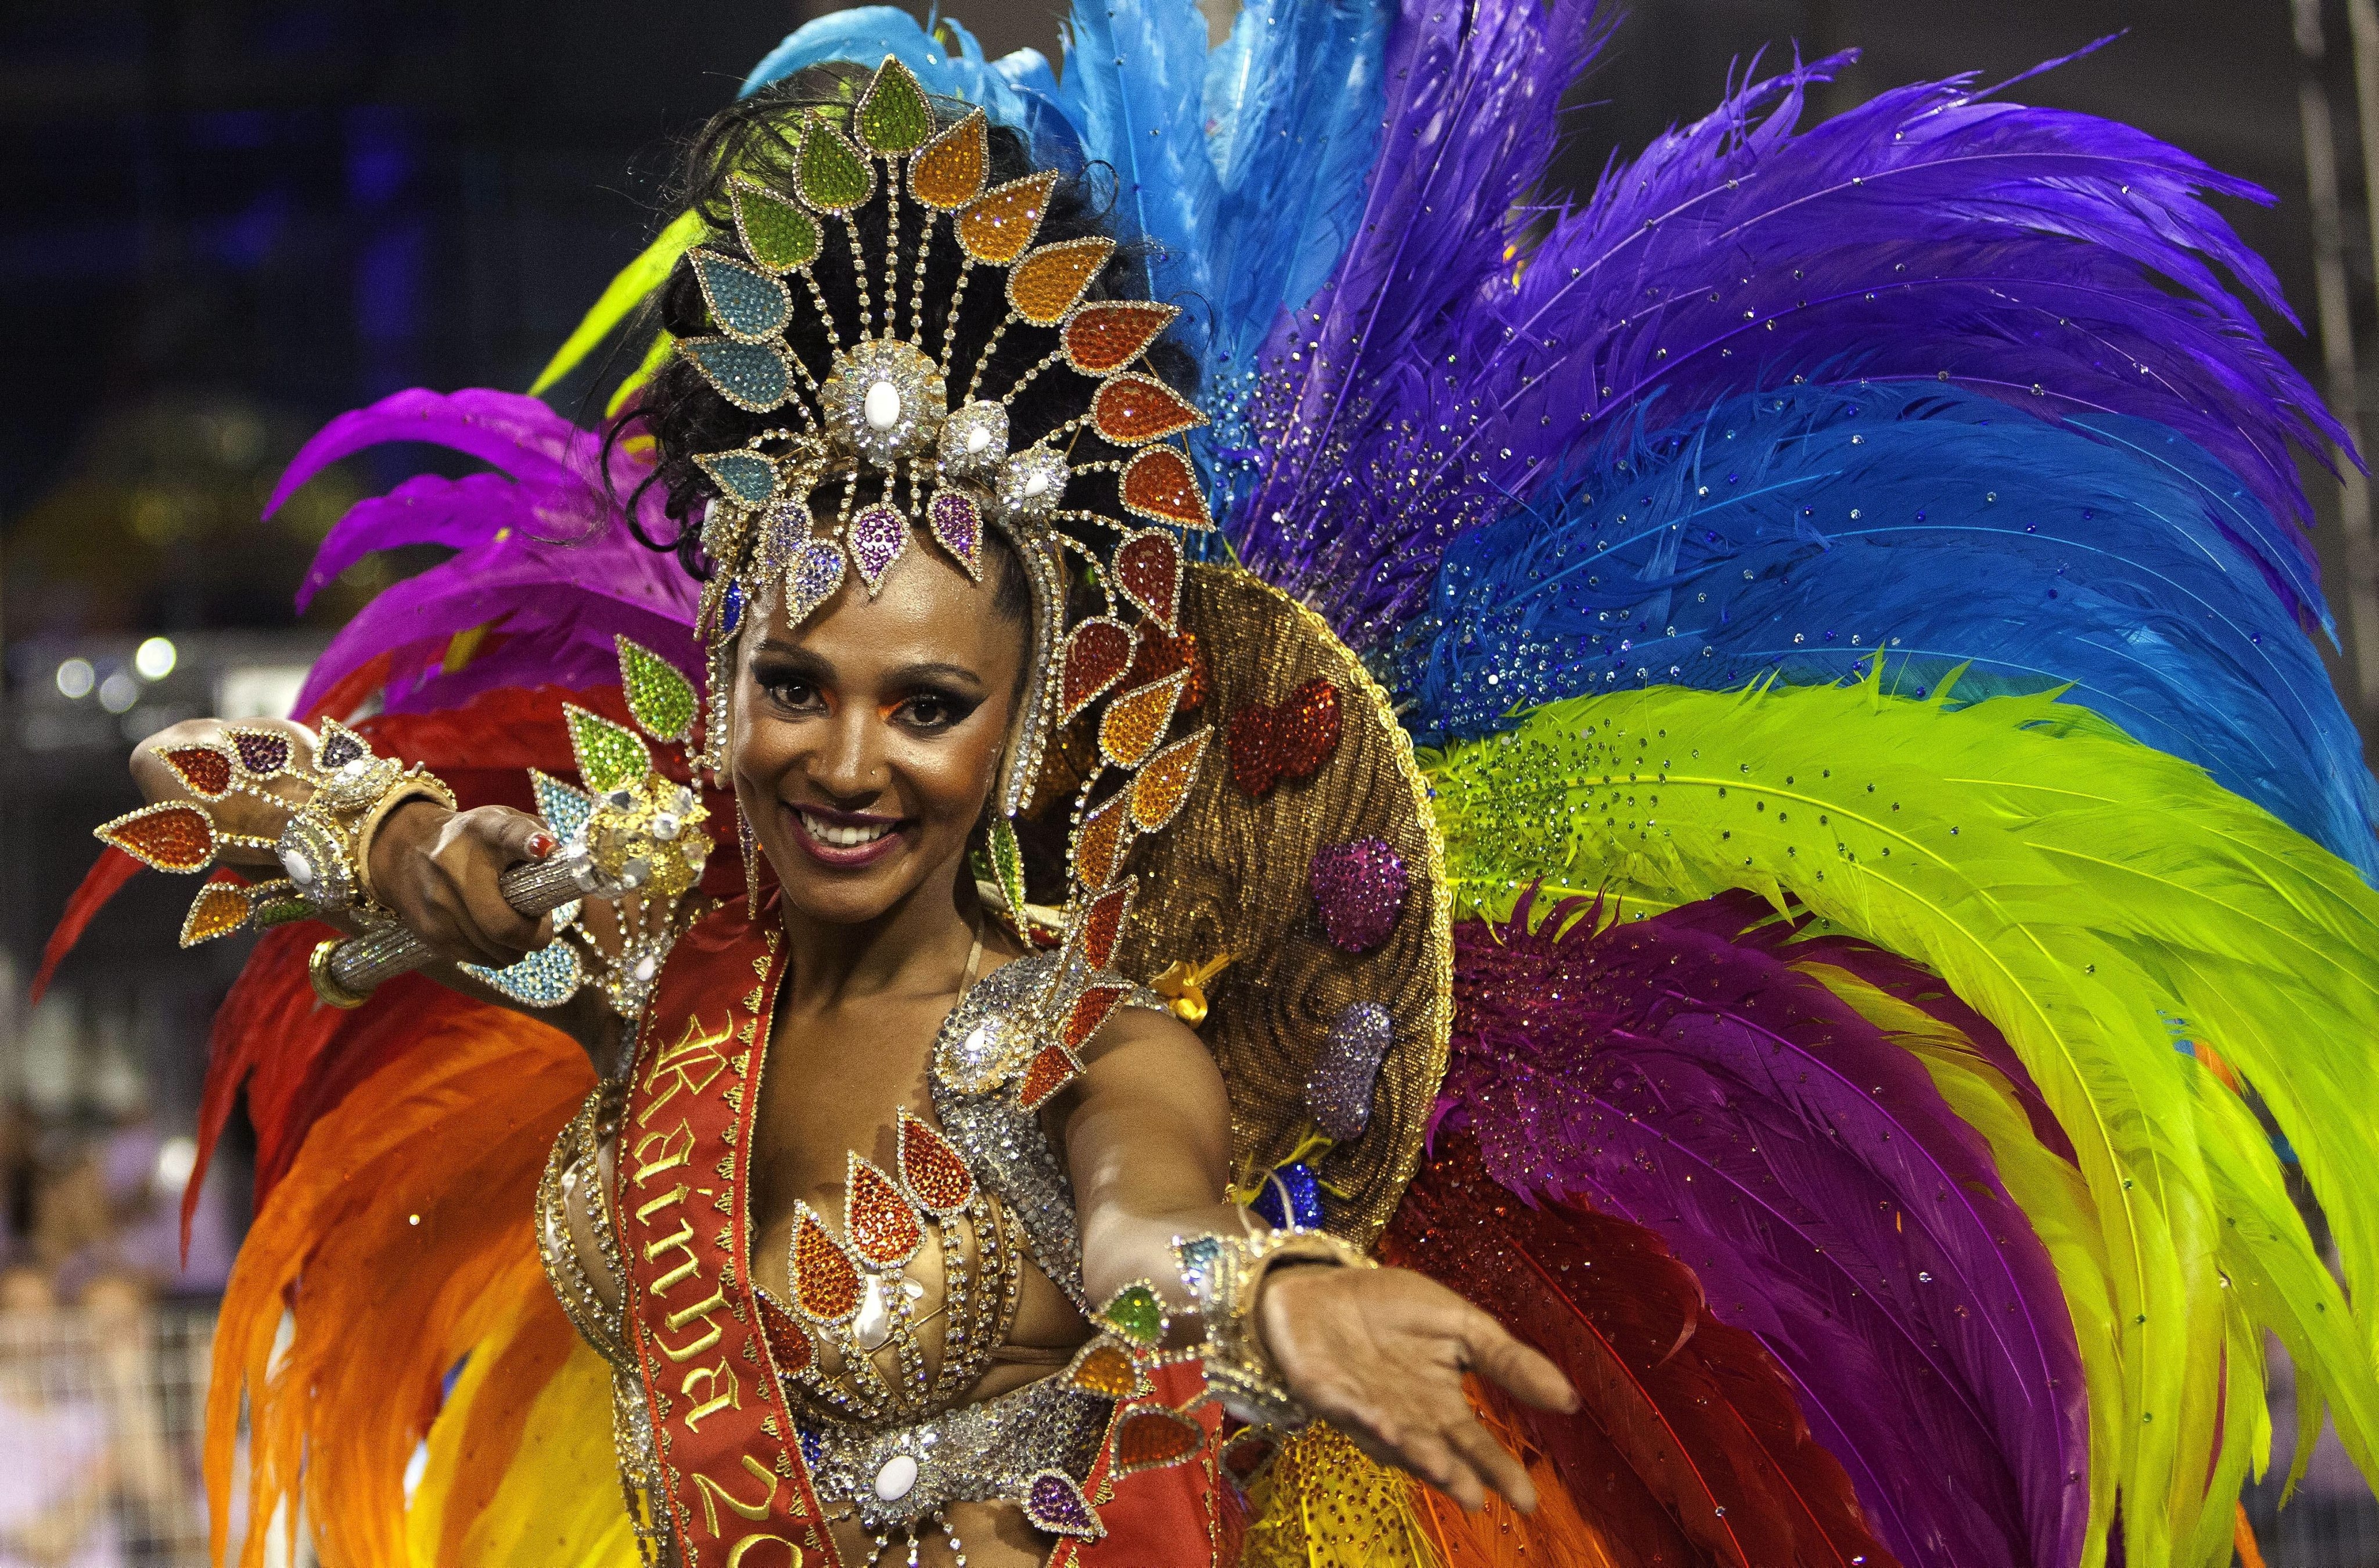 Carnival. Карнавал в Рио-де-Жанейро. Рио-де-Жанейро карнавал костюмы. Карнавал в Рио-де-Жанейро (бразильский карнавал). Бразилия фестиваль Рио де Жанейро.